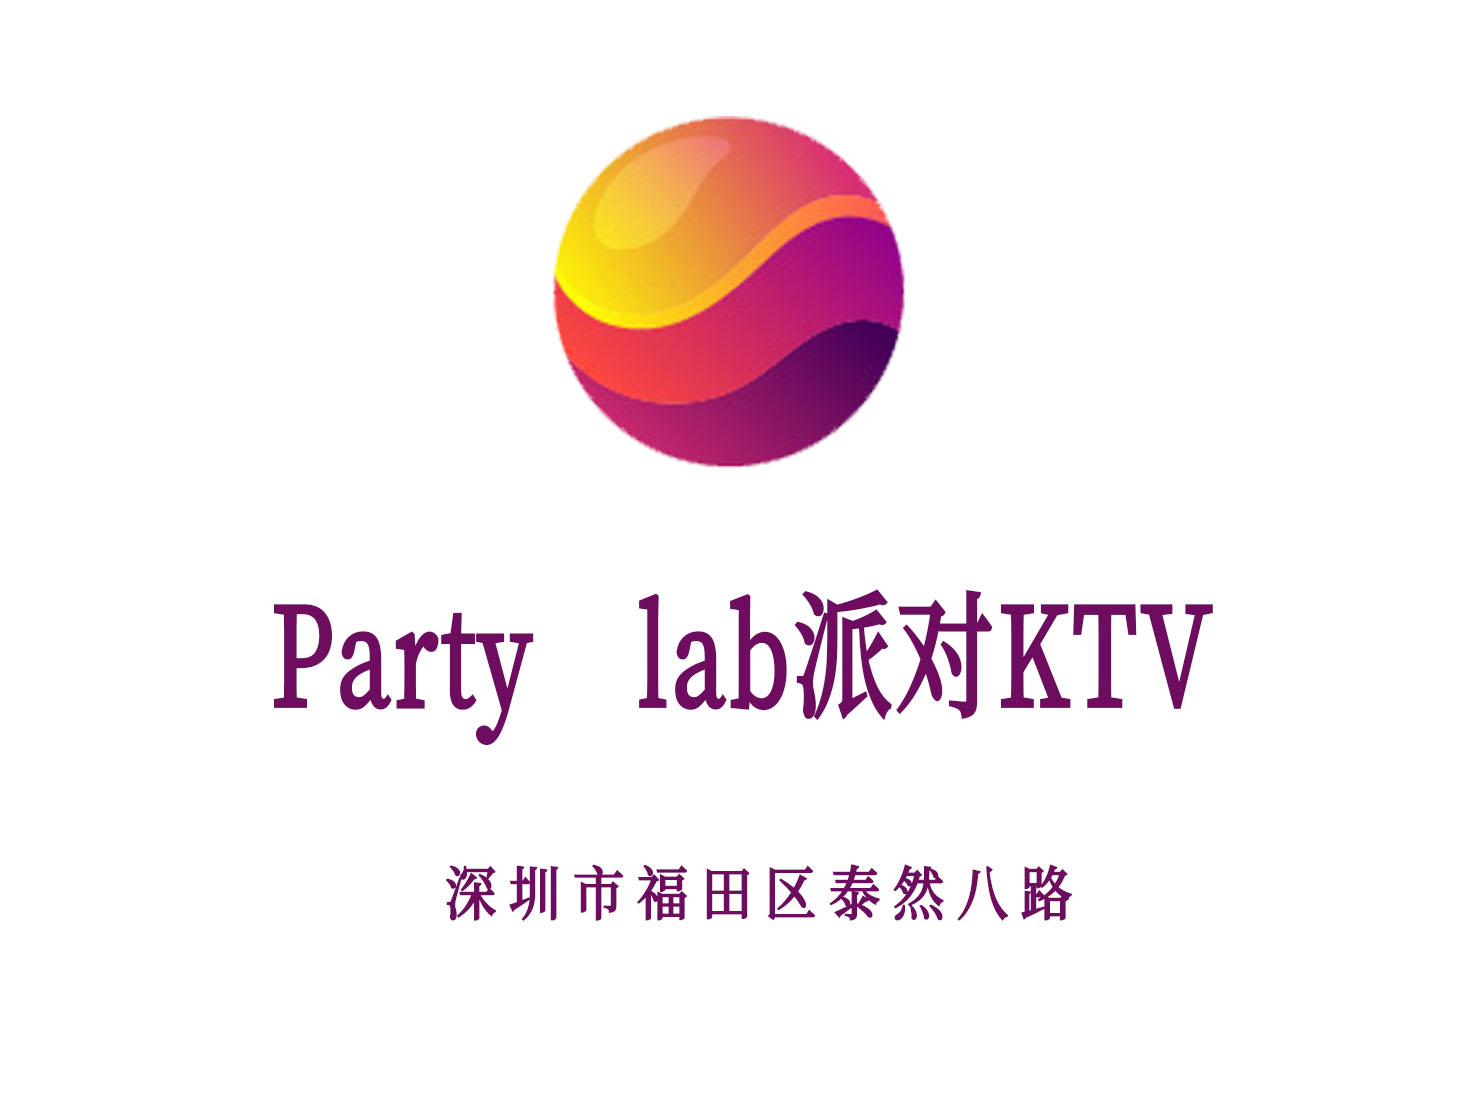 深圳Party lab派对KTV